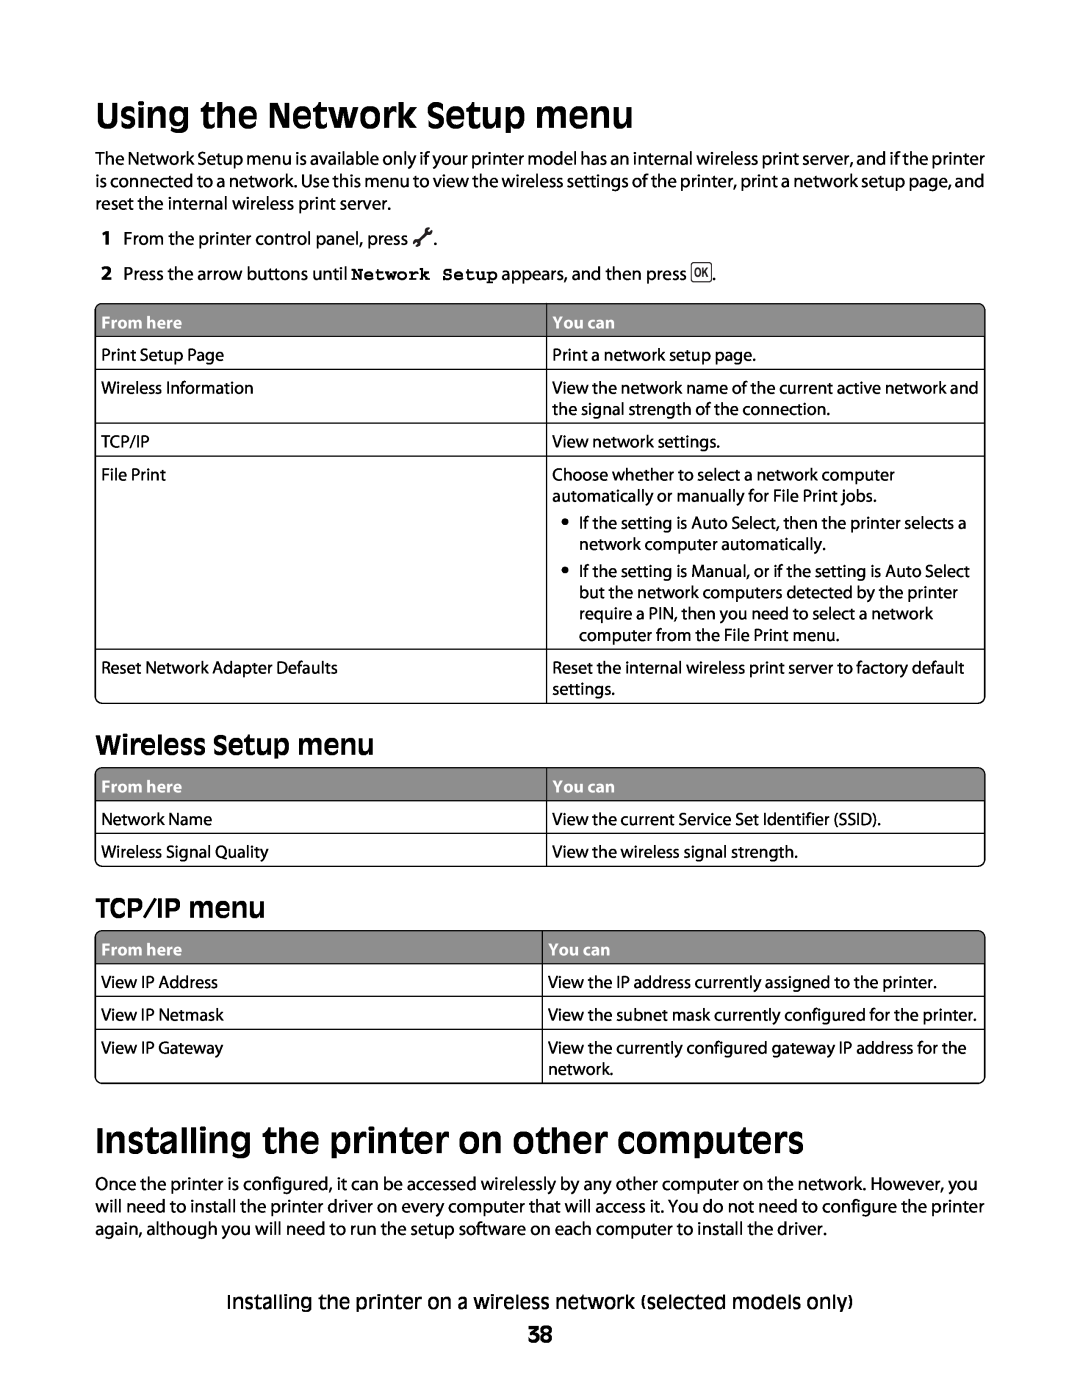 Lexmark 4600 Using the Network Setup menu, Installing the printer on other computers, Wireless Setup menu, TCP/IP menu 